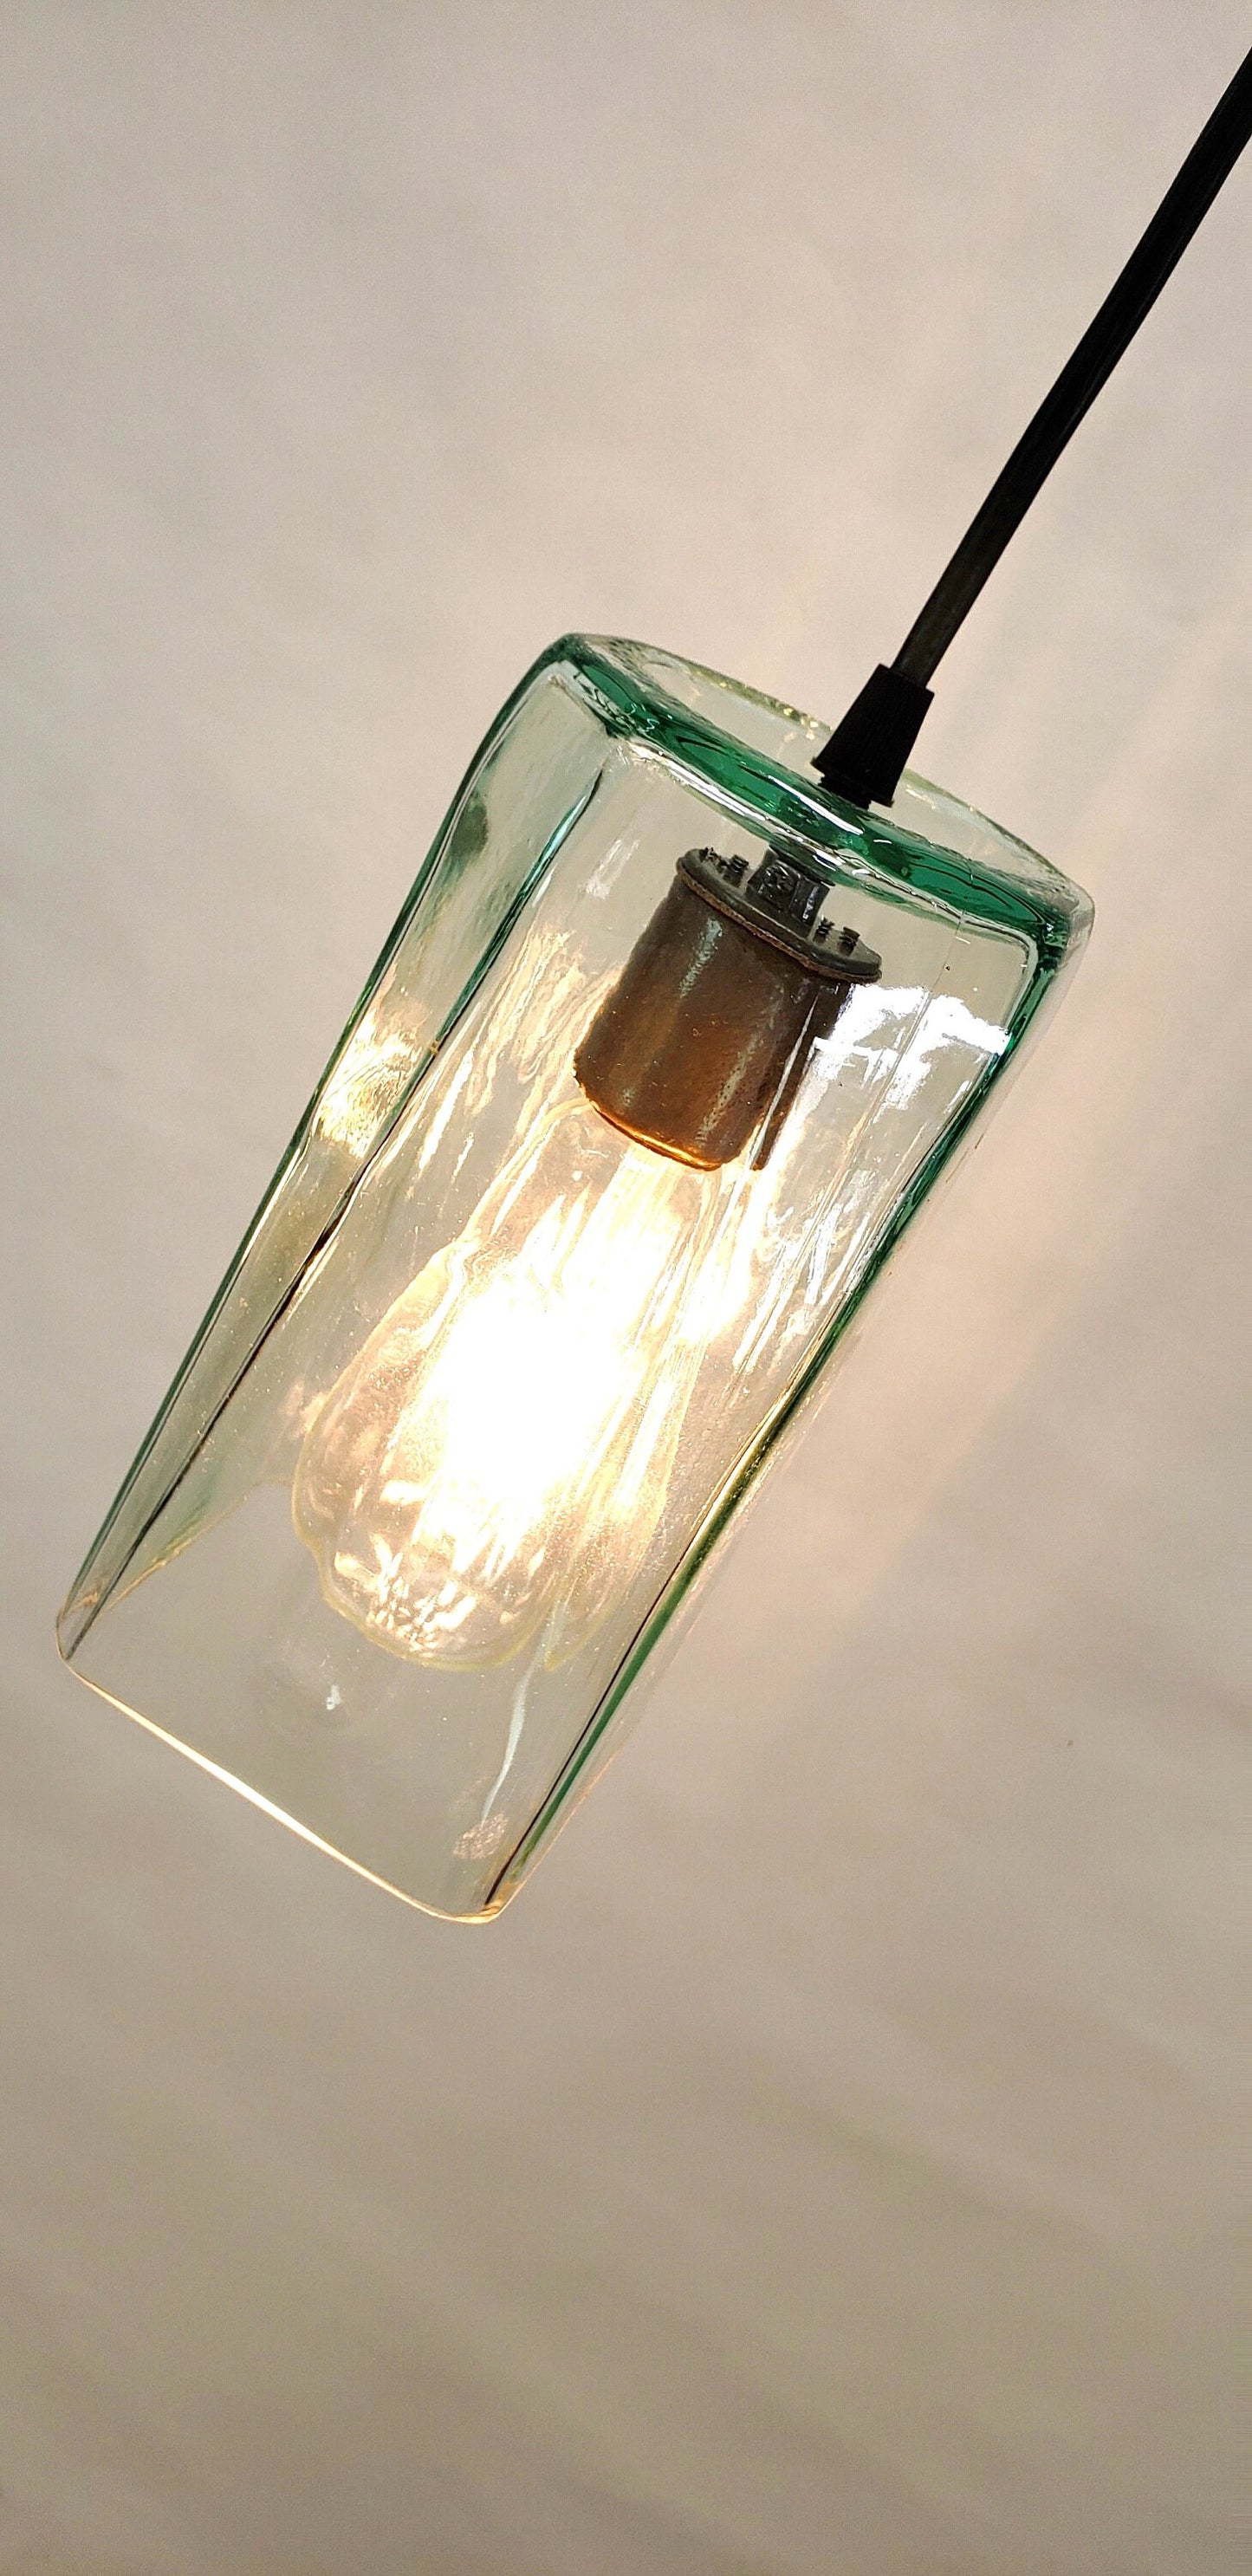 Recycled glass pendant light - Amsterdam - Pendant Light. 100% Recycled Glass!